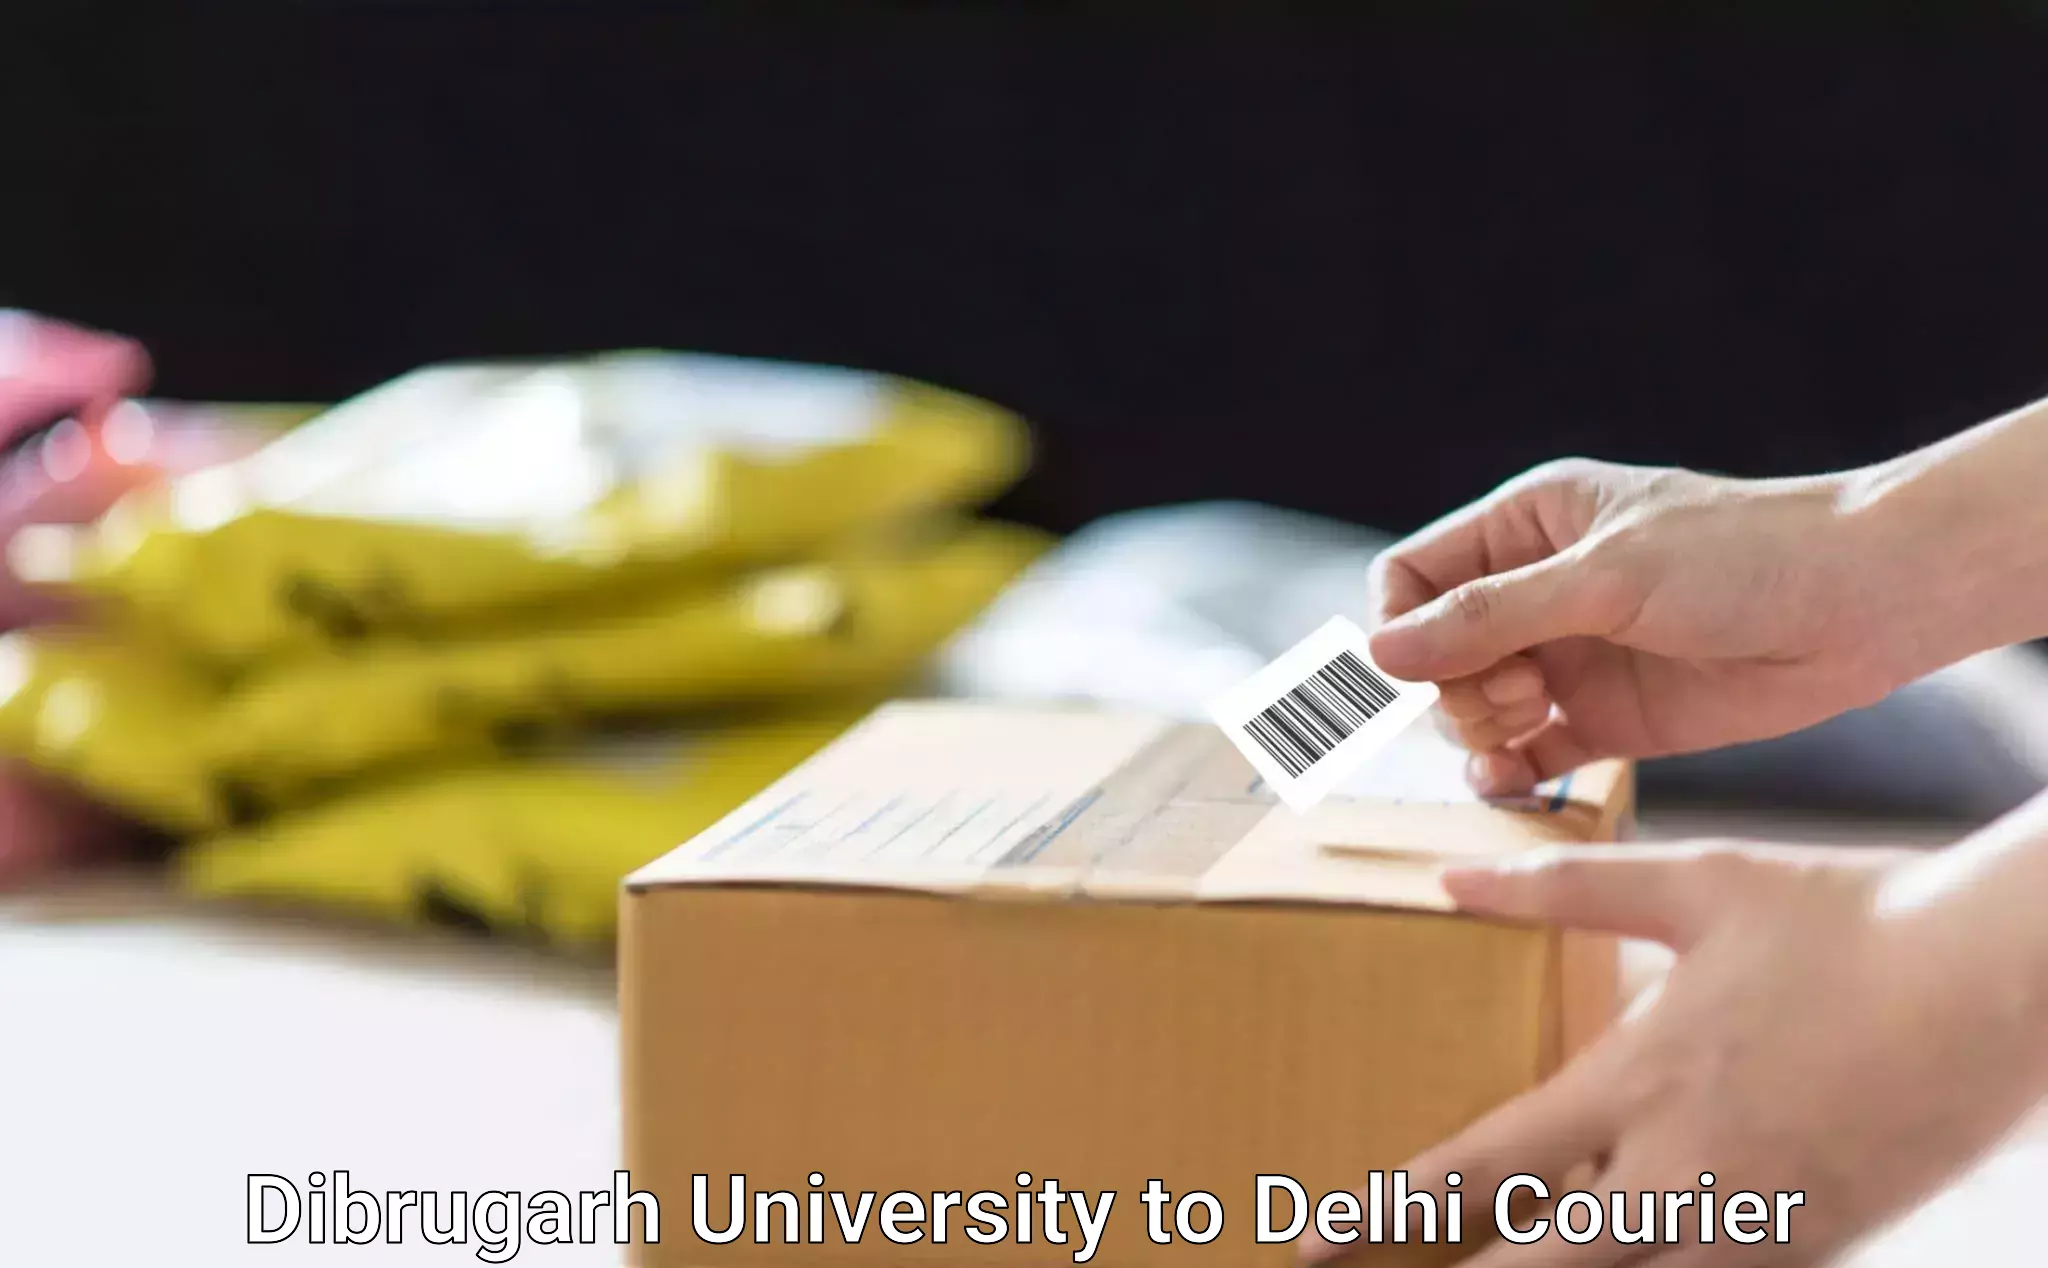 Logistics service provider Dibrugarh University to East Delhi